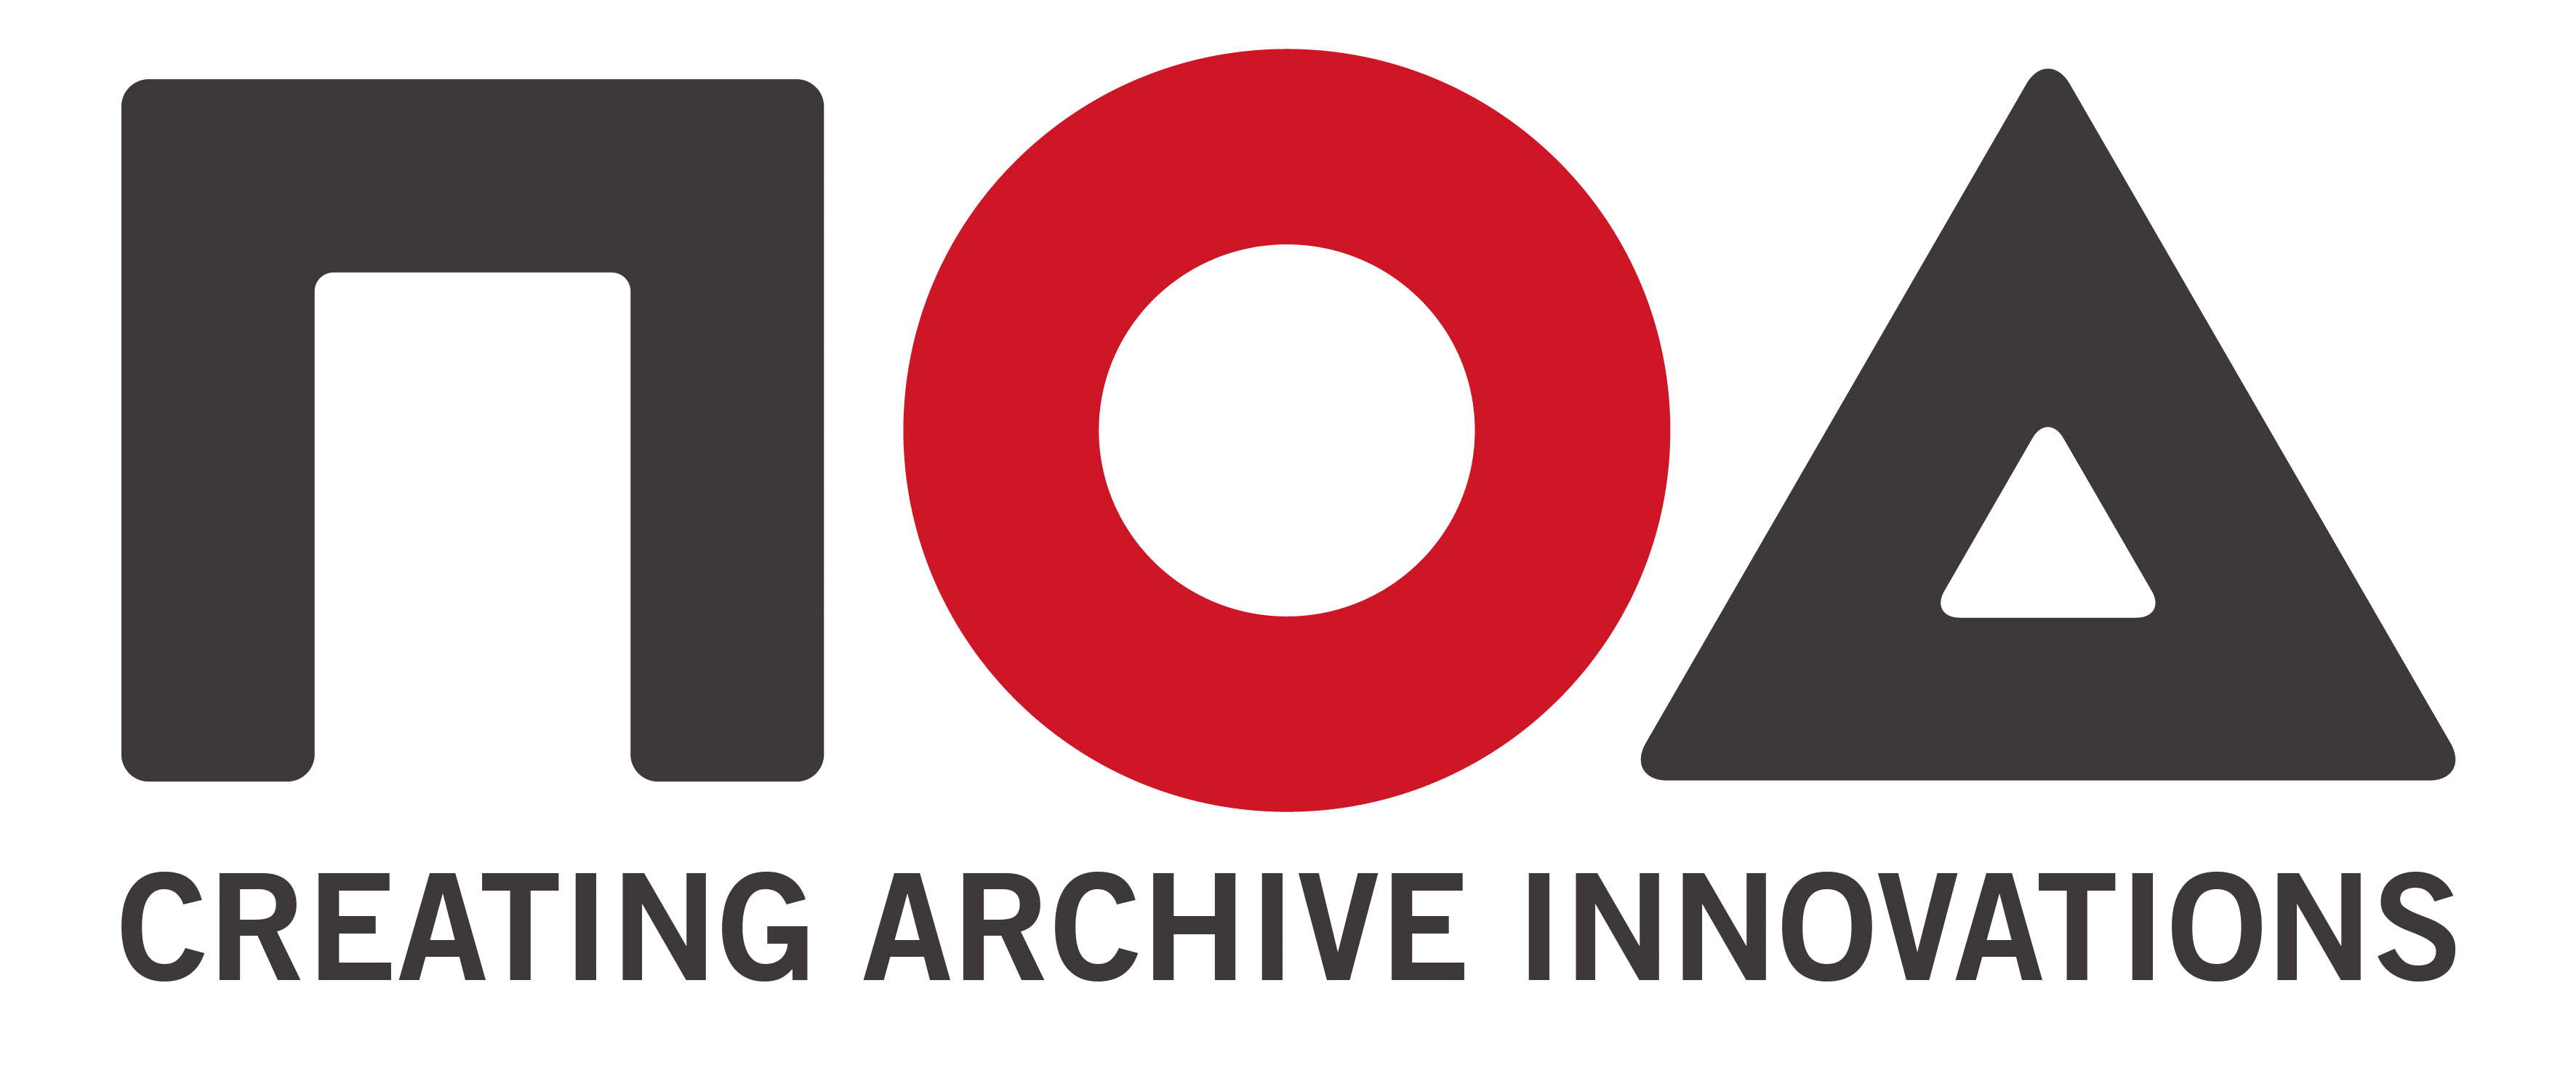 Noa Logo - NOA LOGO June18 FINAL BIG with clain M – XPresso Communications ...